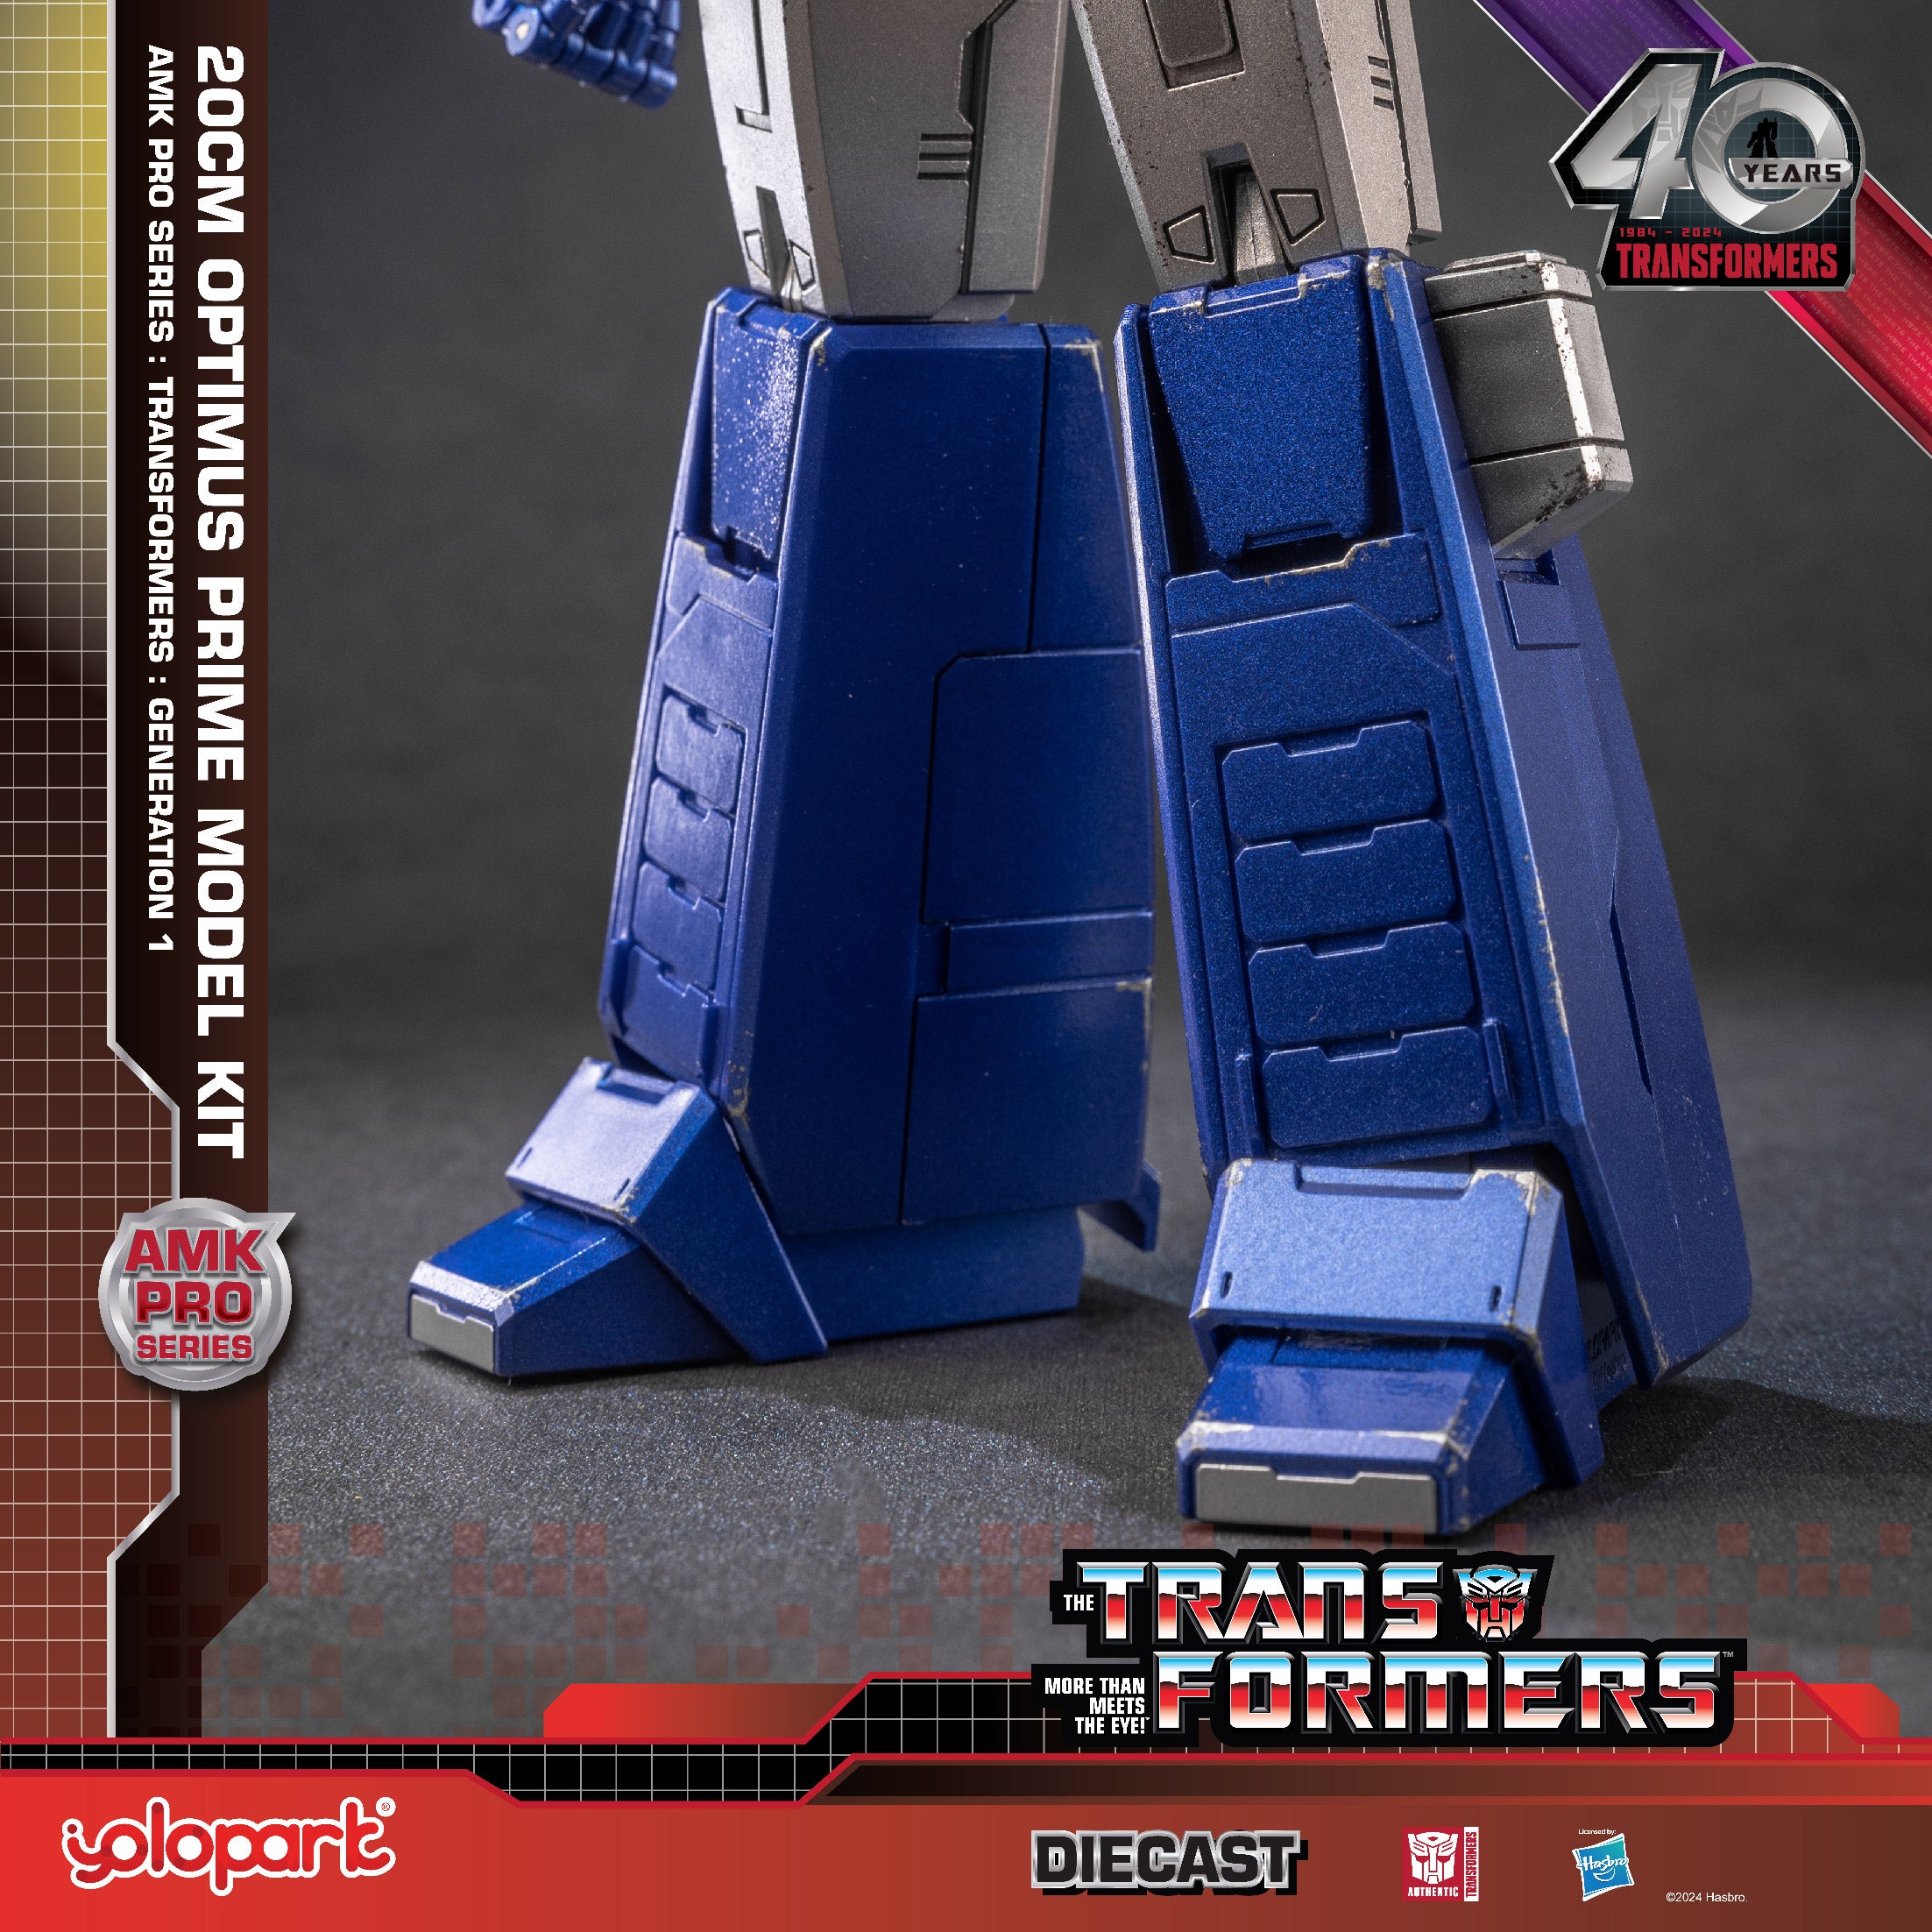 AMK PRO Series Transformers G1 - 20cm Optimus Prime Model Kit